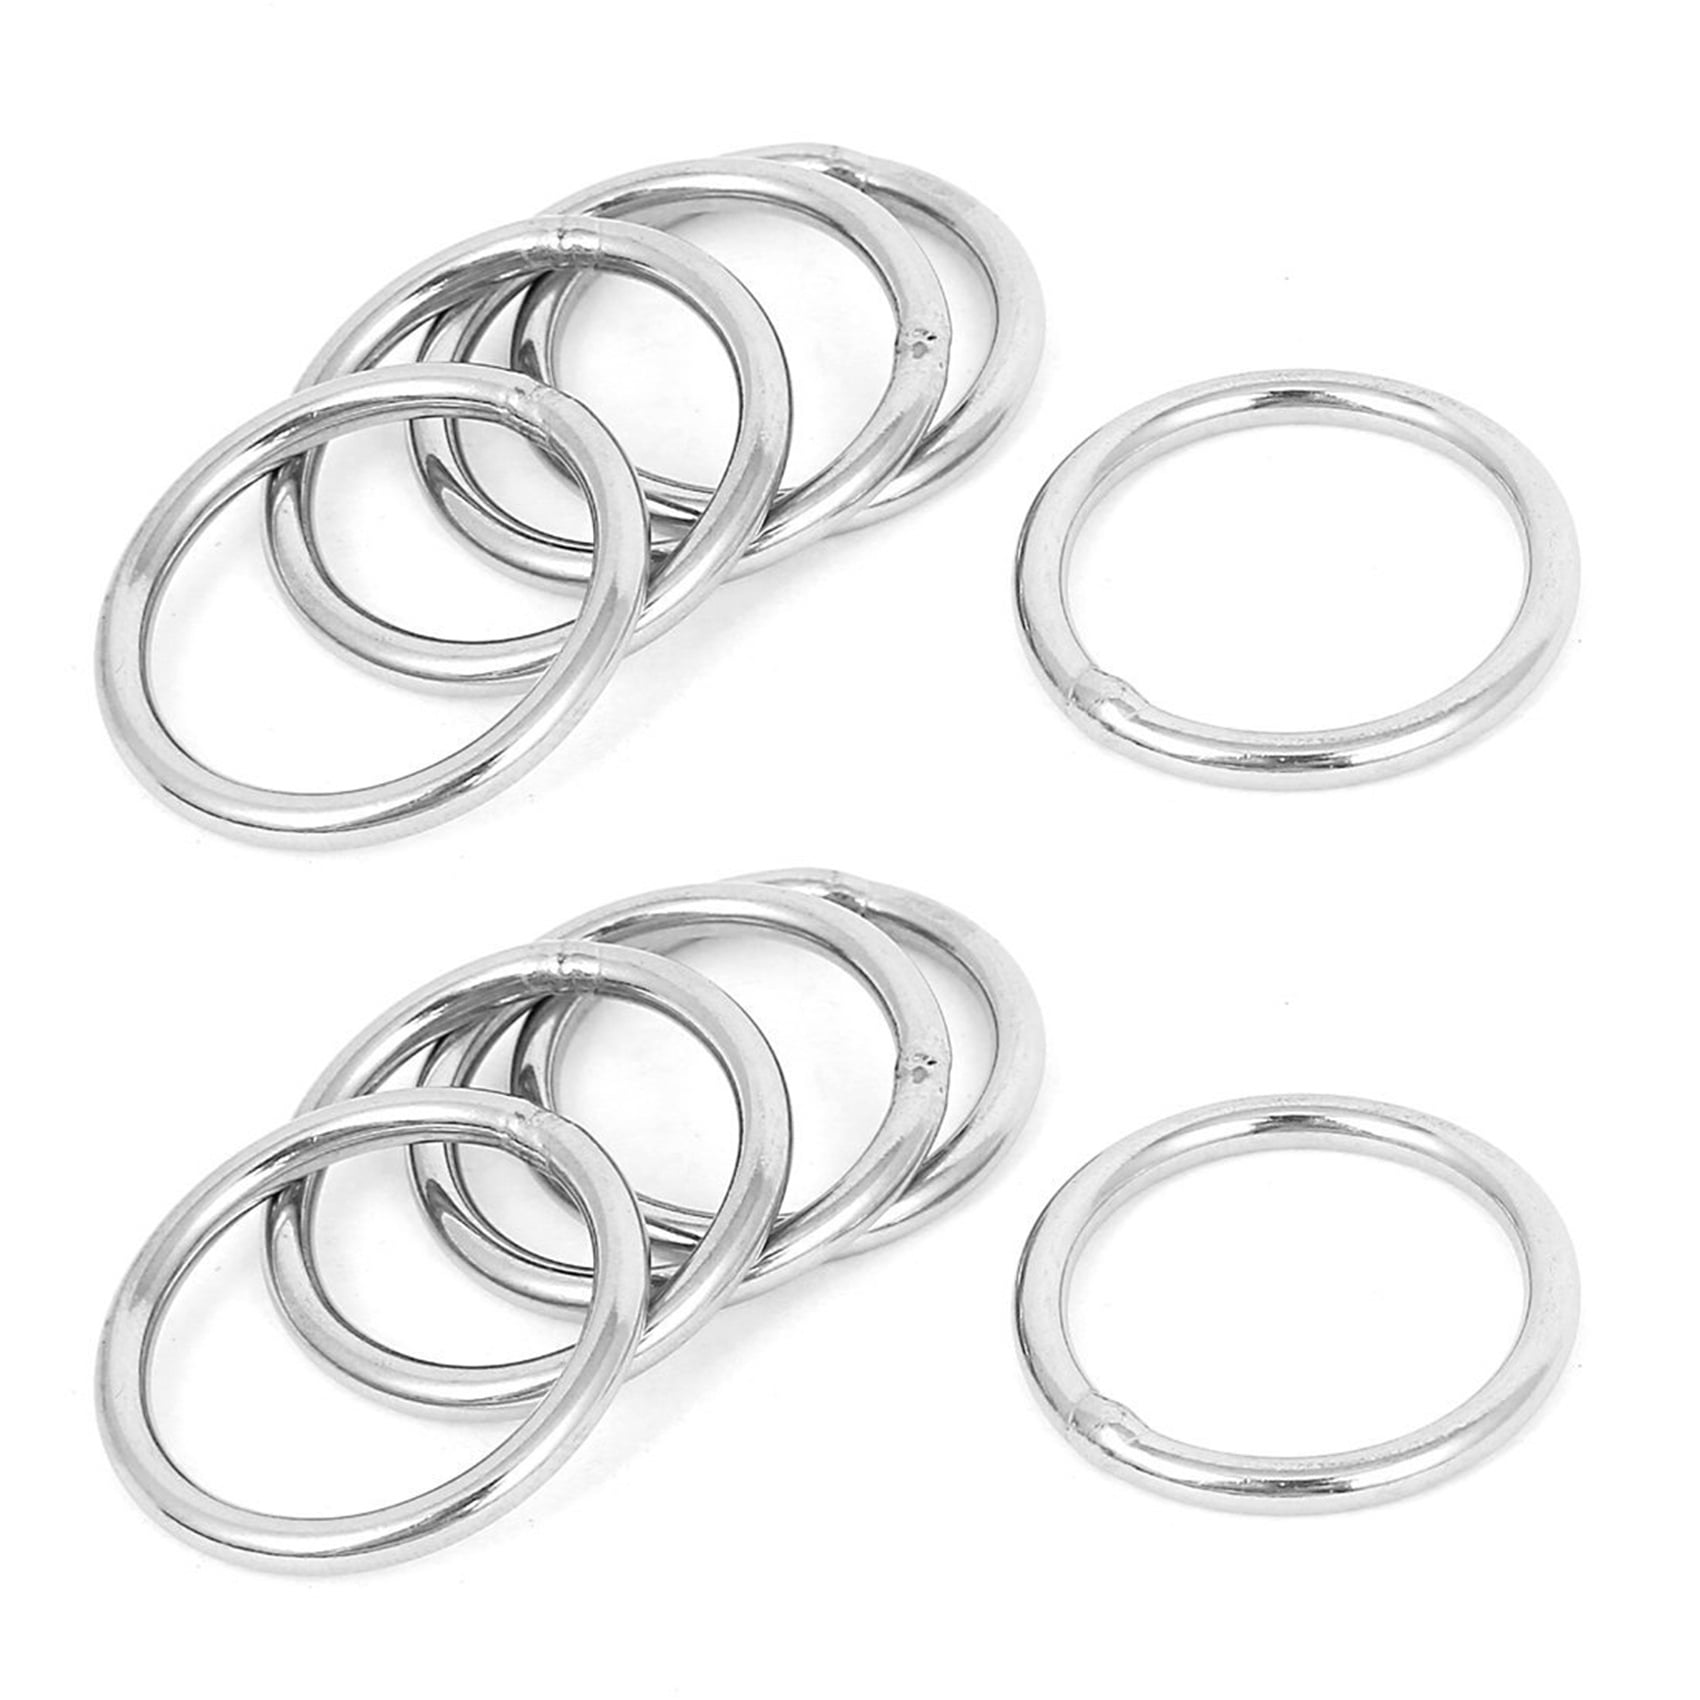 Beginner Zaklampen Banyan 30mm x 3mm Stainless Steel Webbing Strapping Welded O Rings 10 Pcs -  Walmart.com